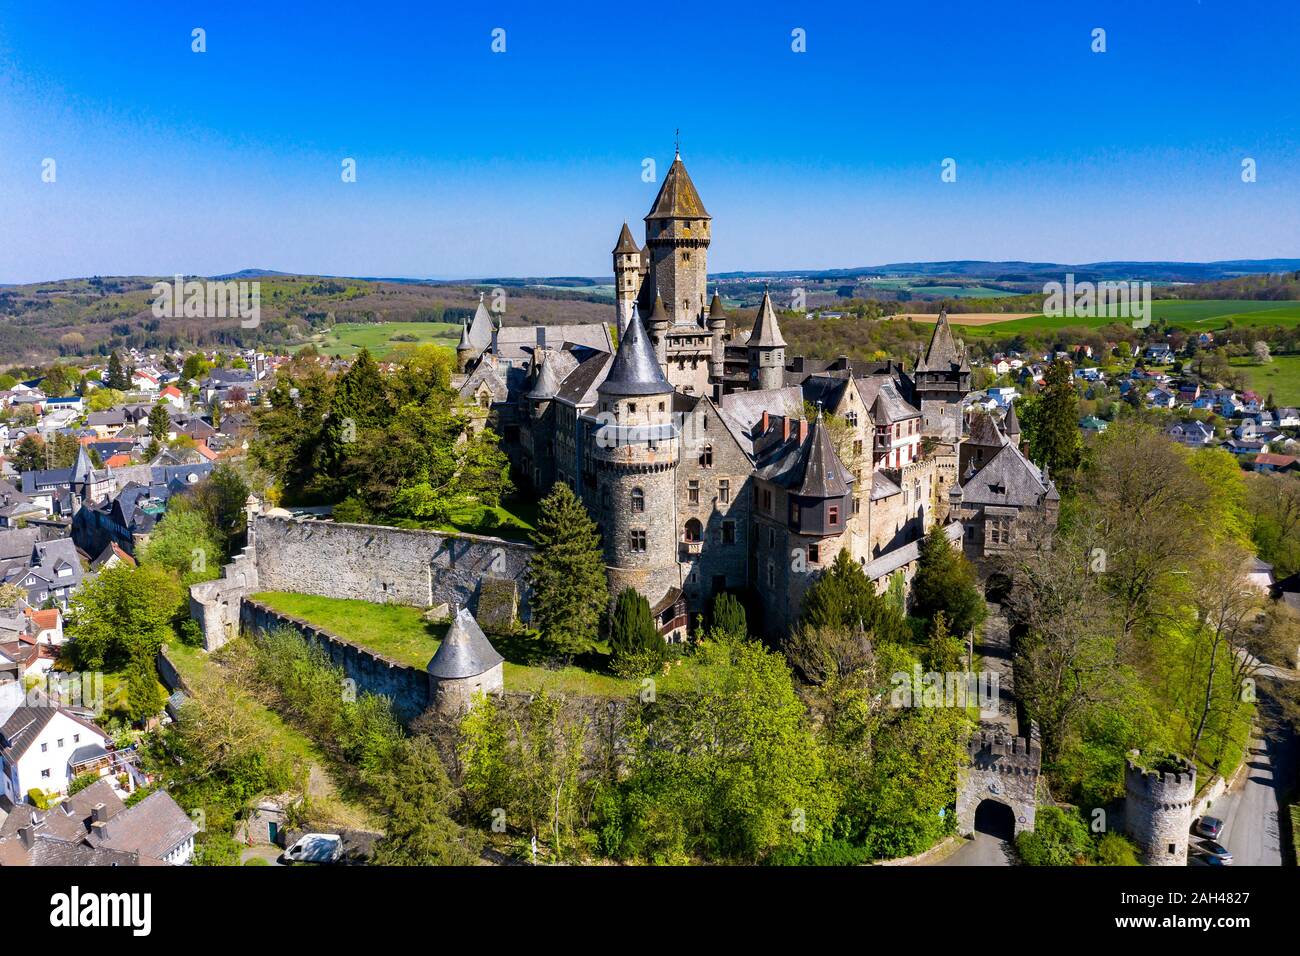 Germania, Hesse, Braunfels, vista aerea di Schloss Braunfels Foto Stock